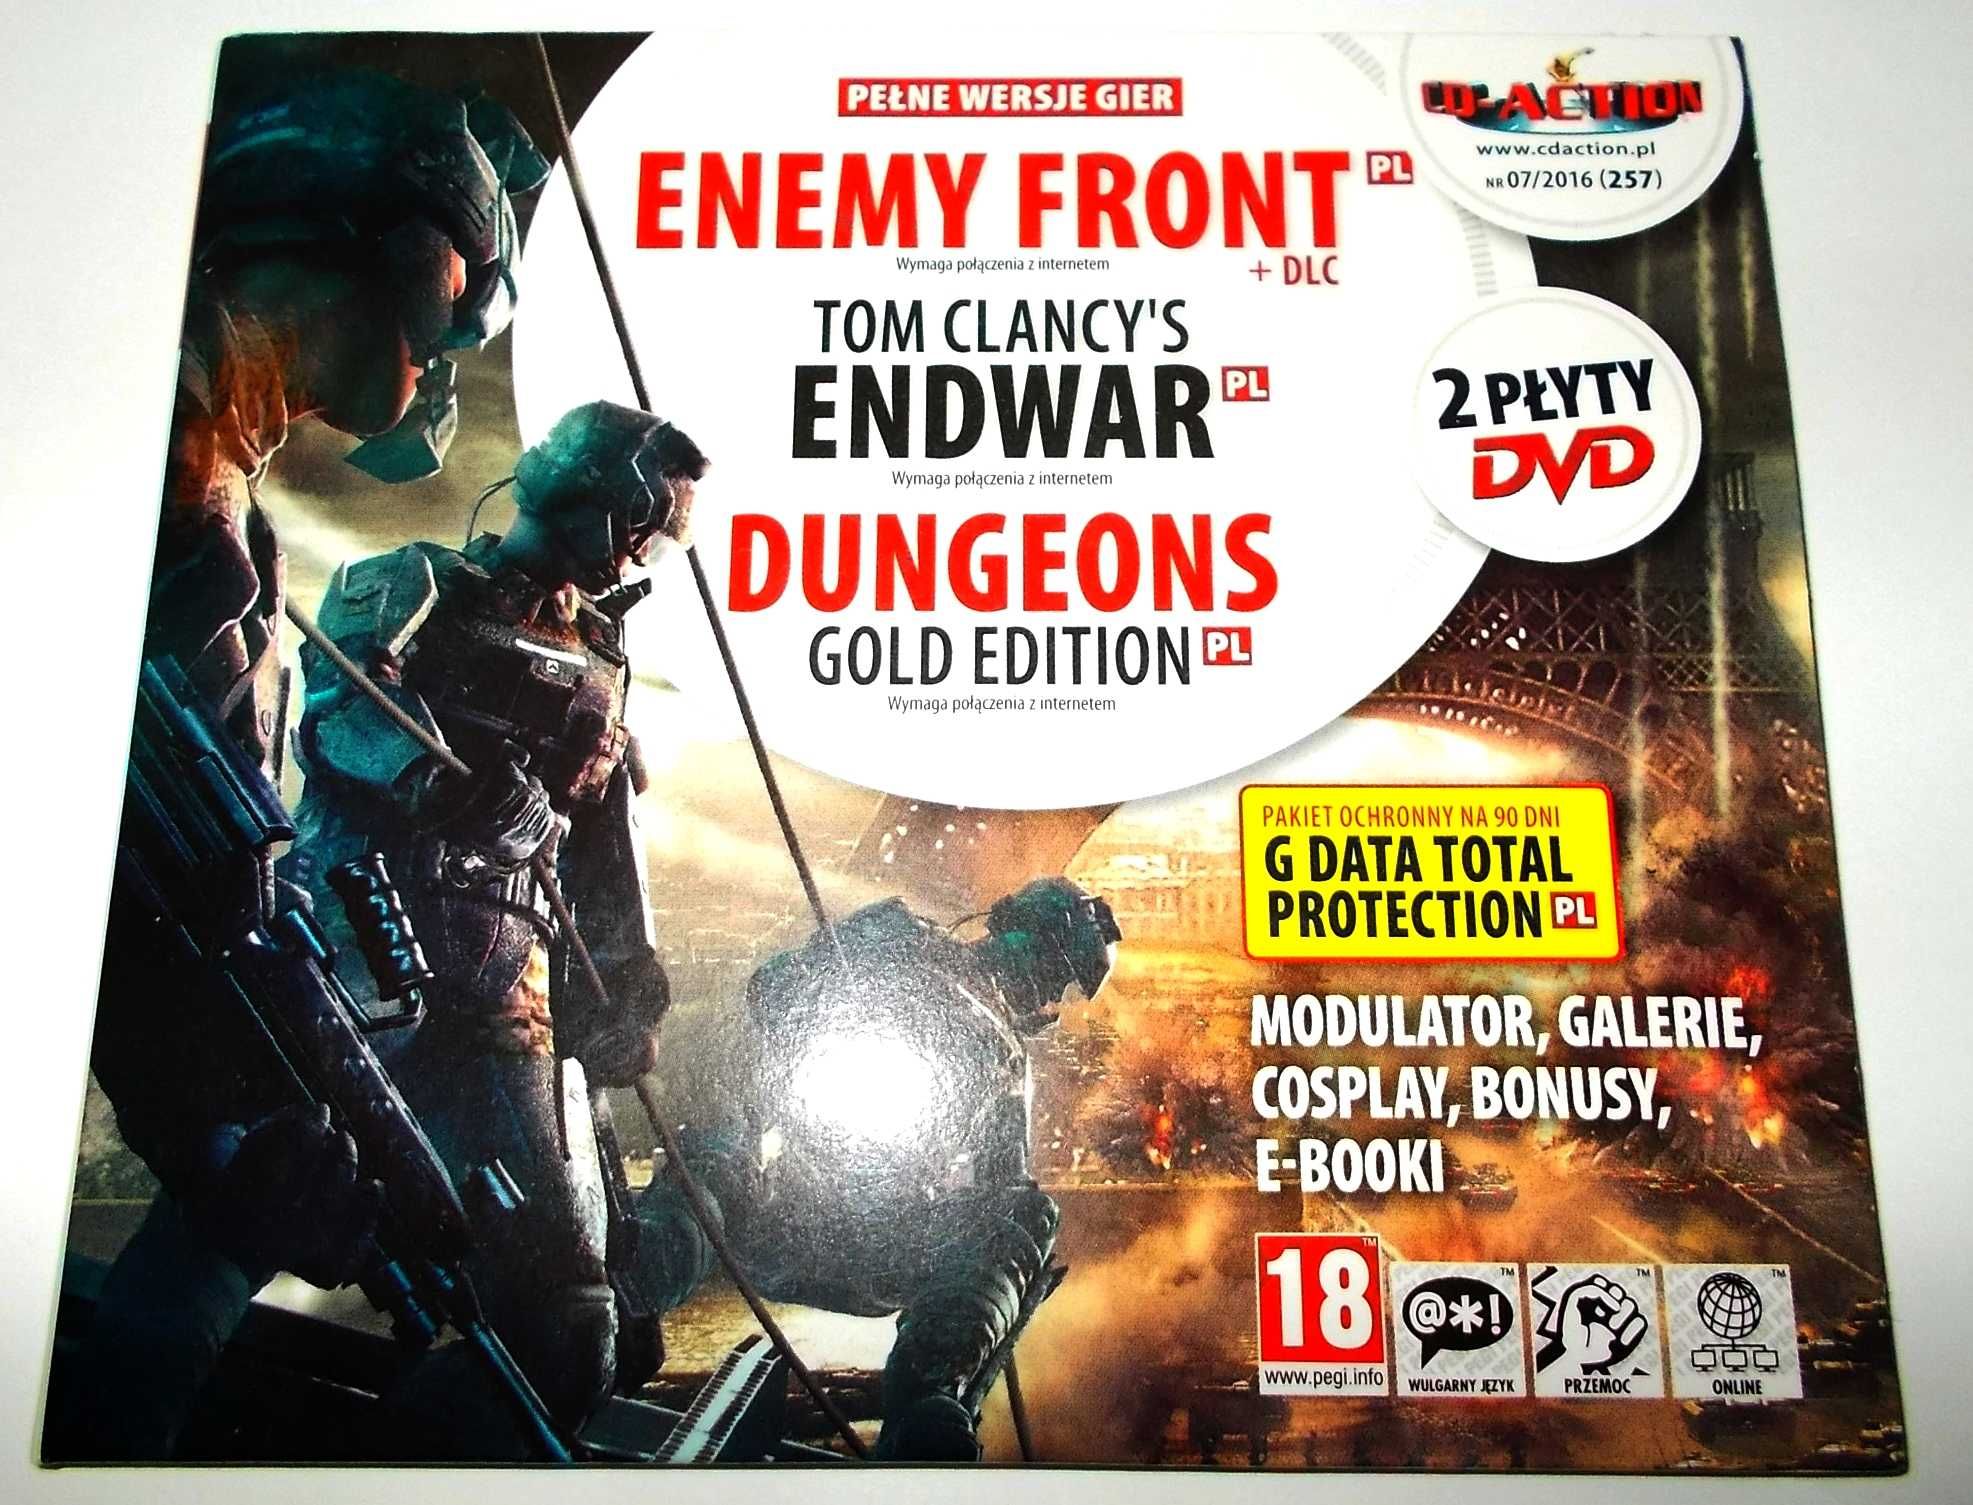 Gra PC - Enemy Front, Endwar, Dungeons - CD Action 257 (07/2016)